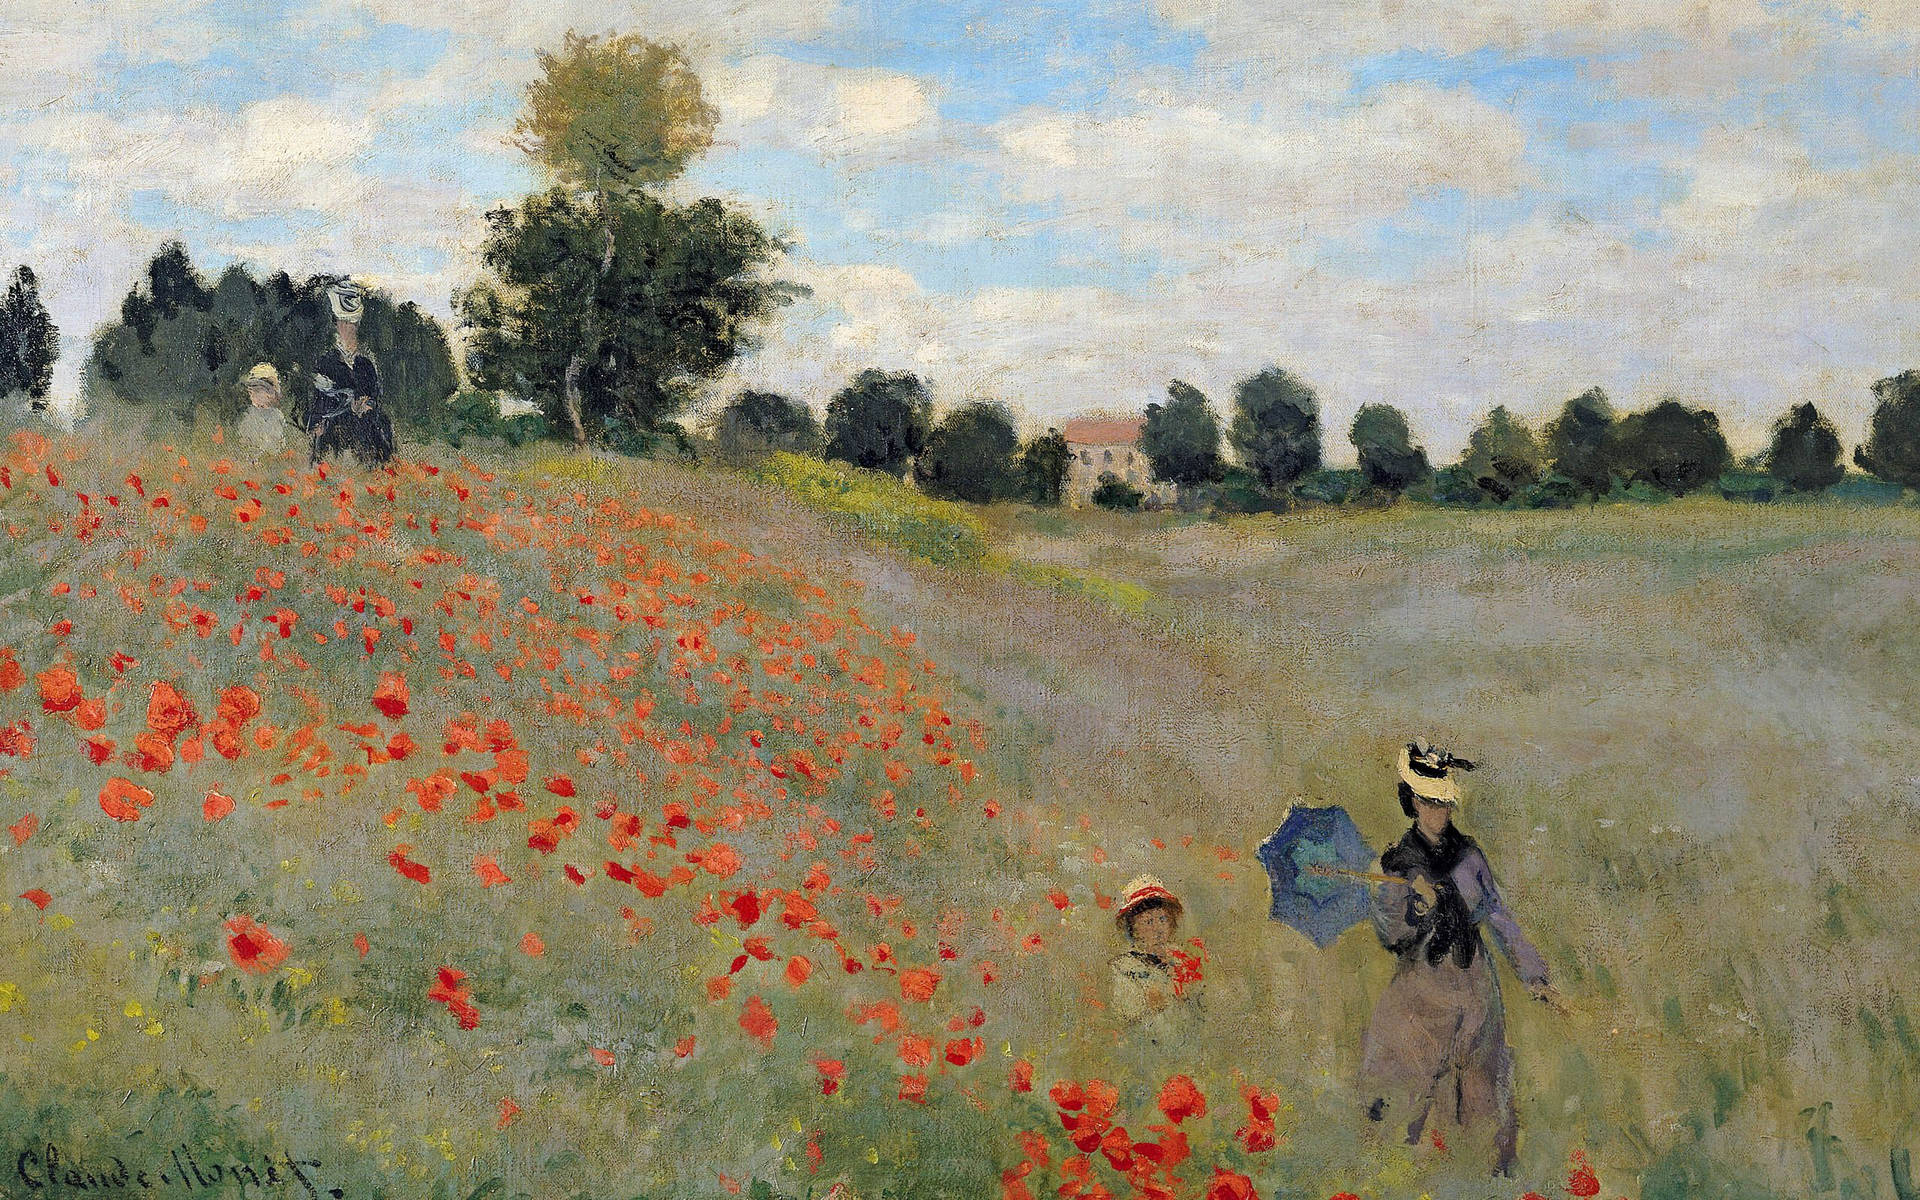 Caption: Renoir’s Masterpiece - Women On The Field Background